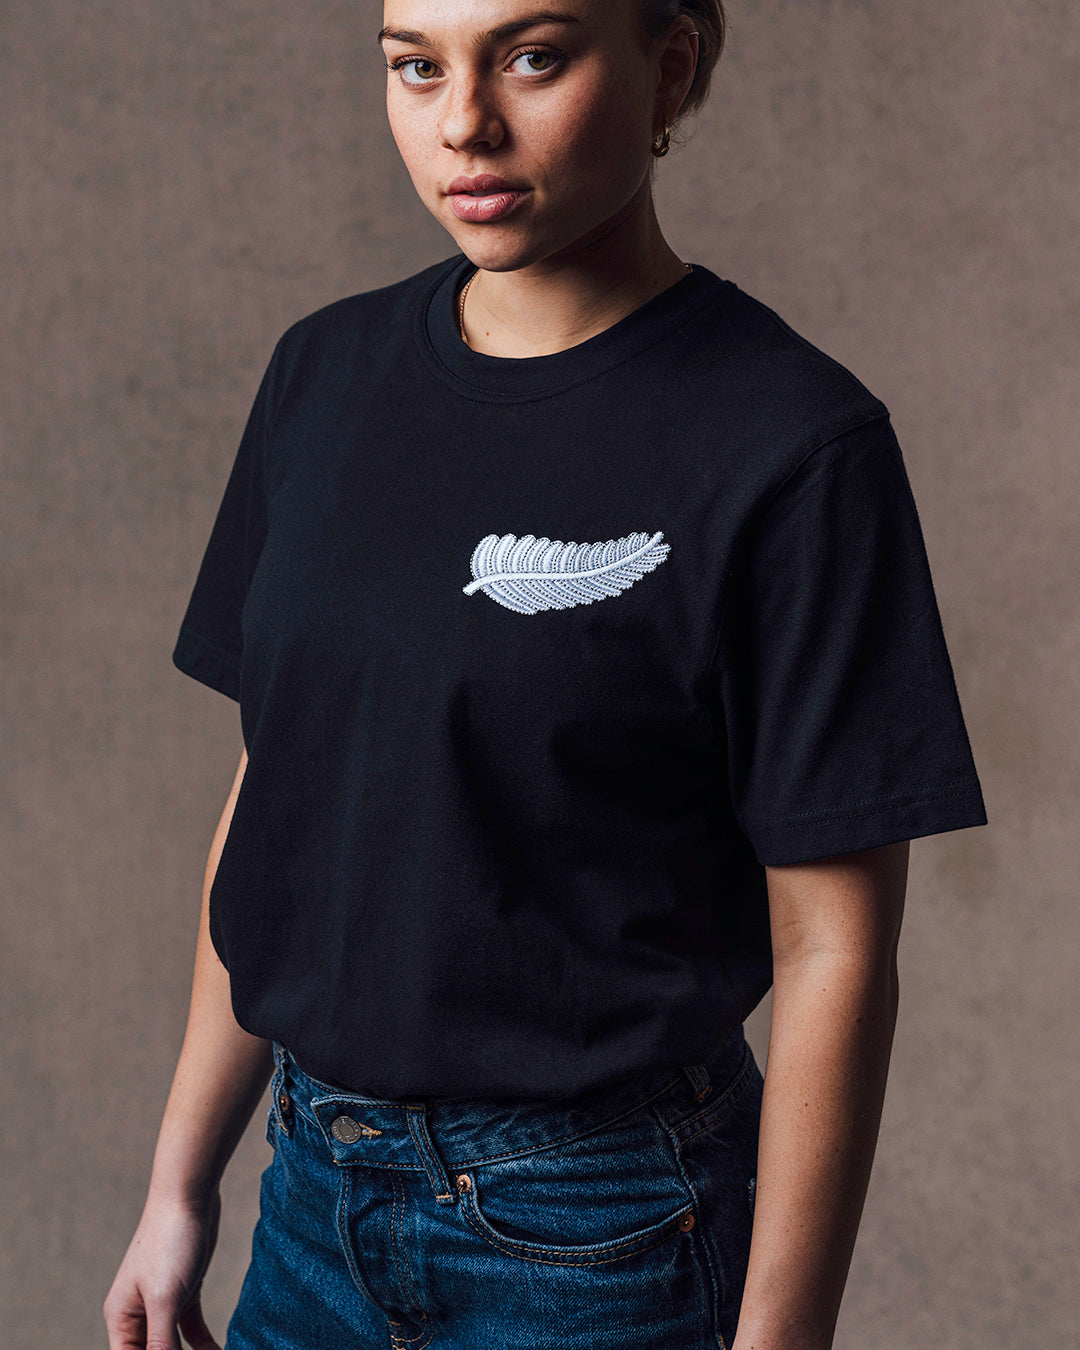 VC: NZL - Women's Vintage T-Shirt - New Zealand